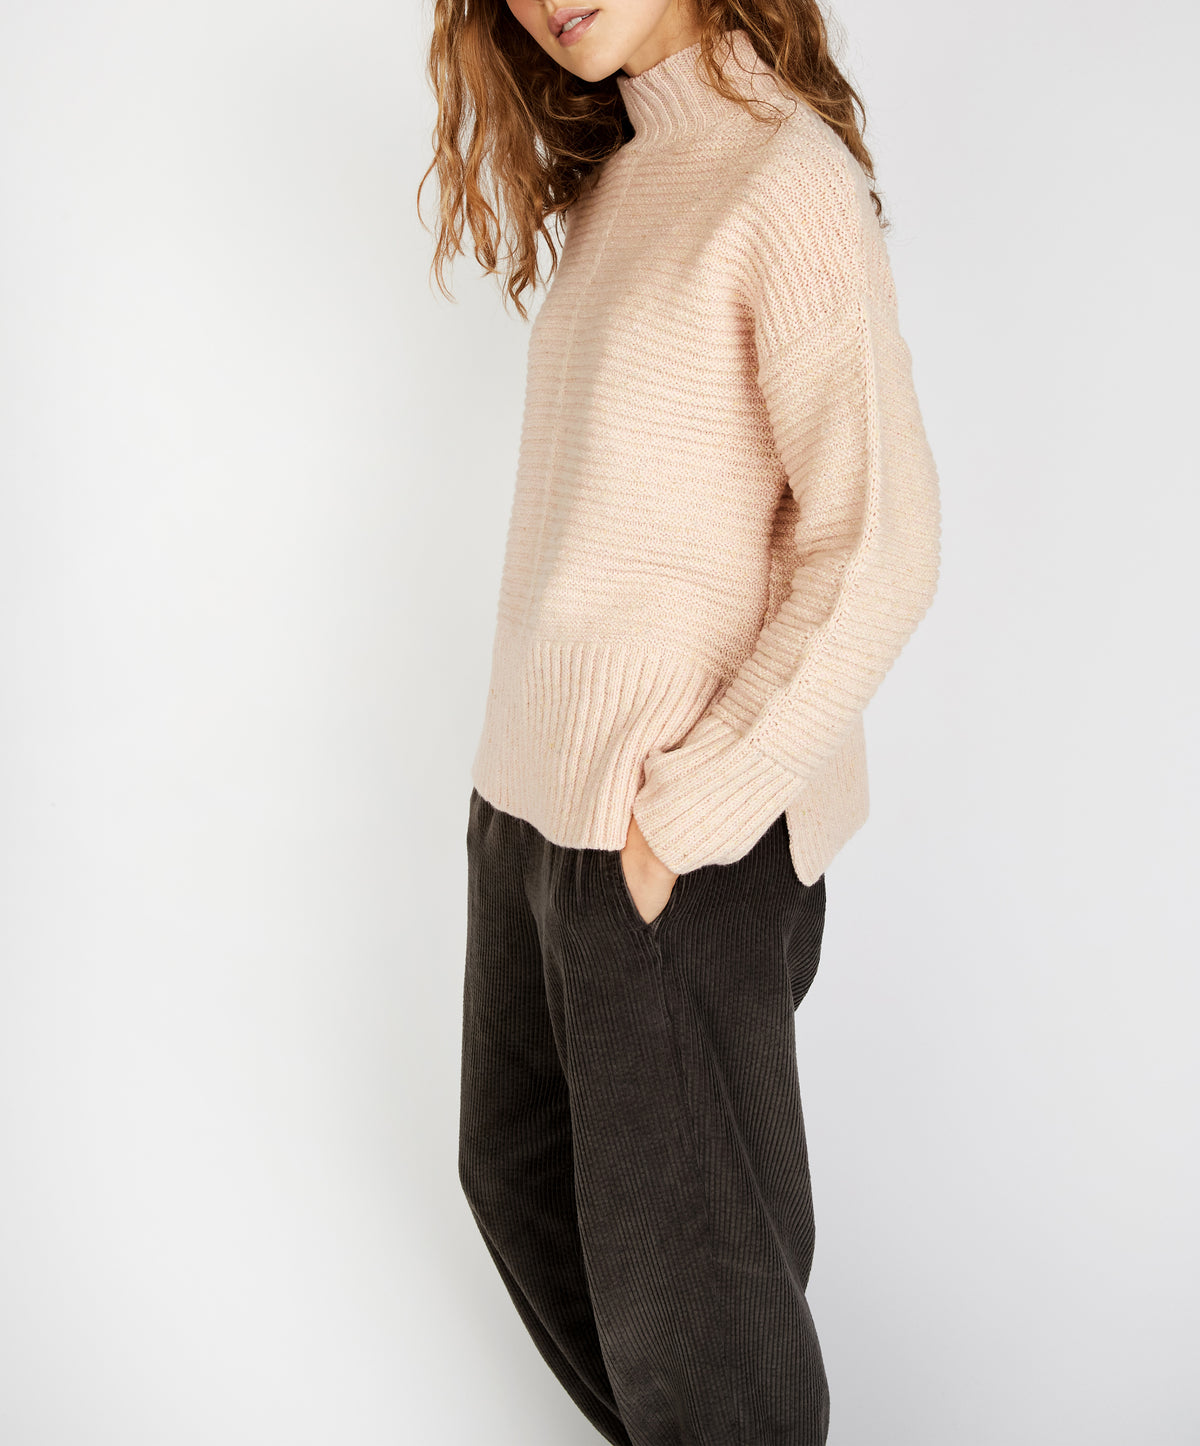 IrelandsEye Knitwear ‘Iris’ Funnel Neck Sweater Dark Denim